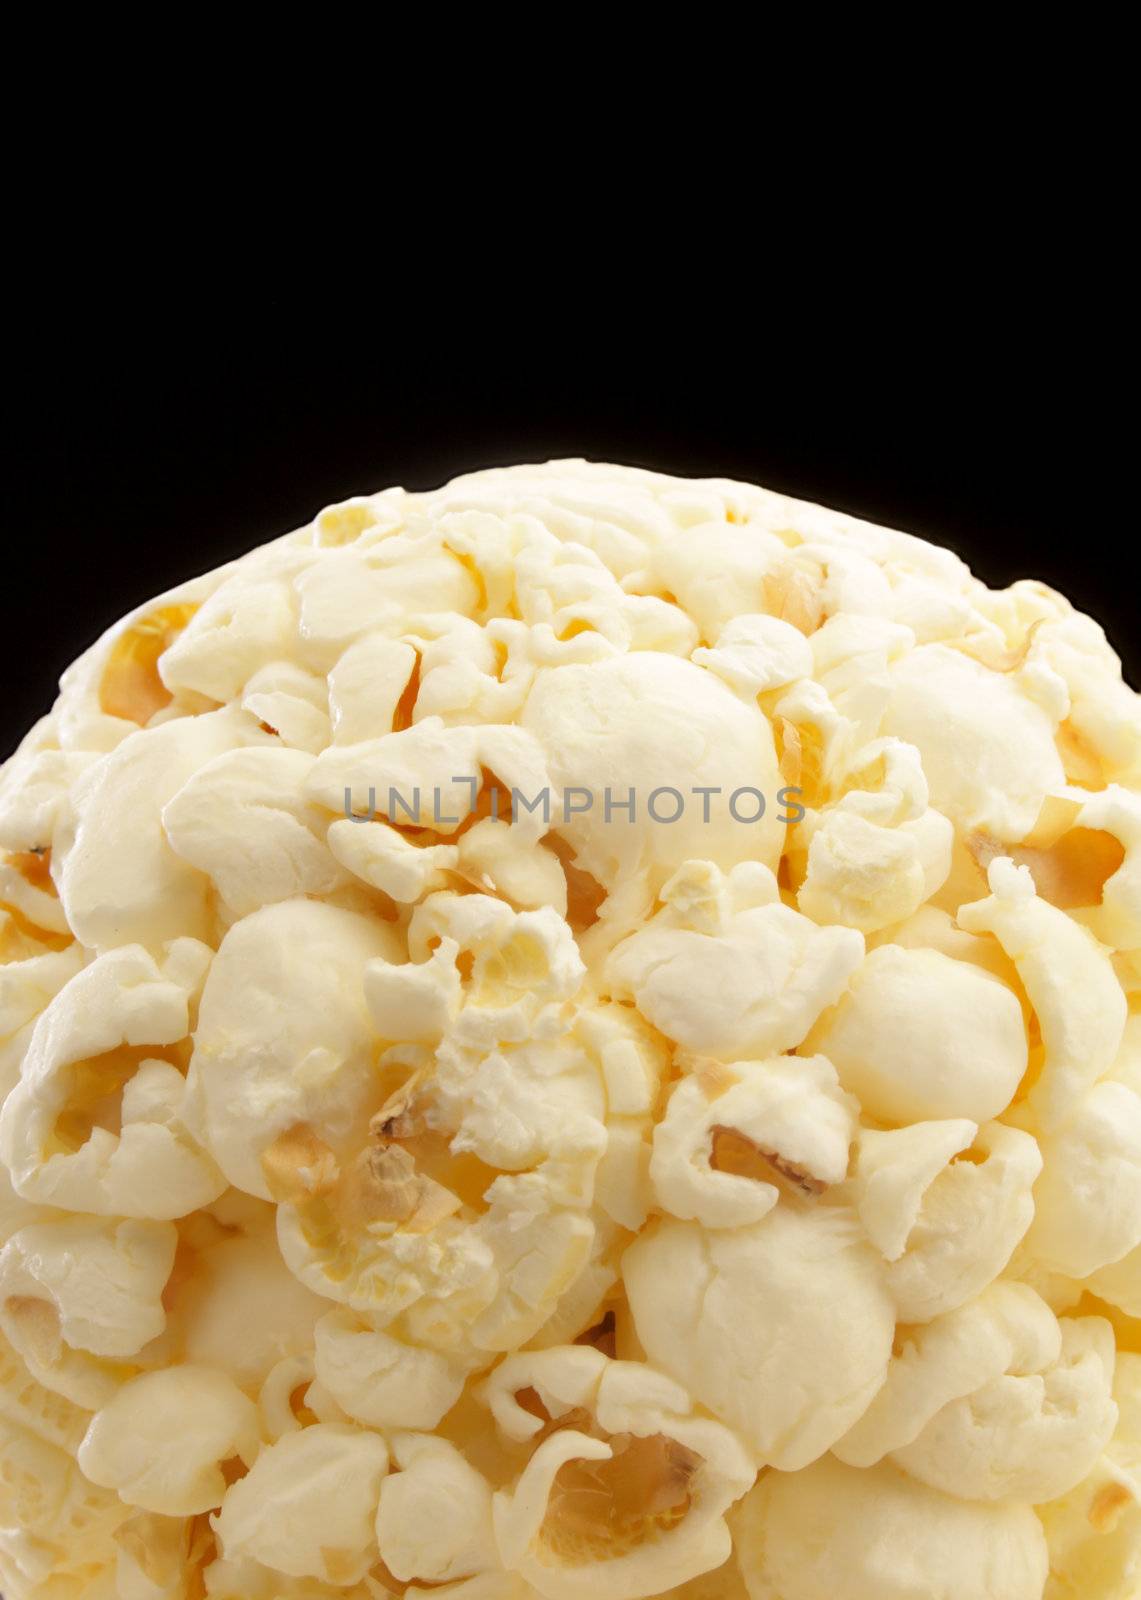 Popcorn Ball by carterphoto